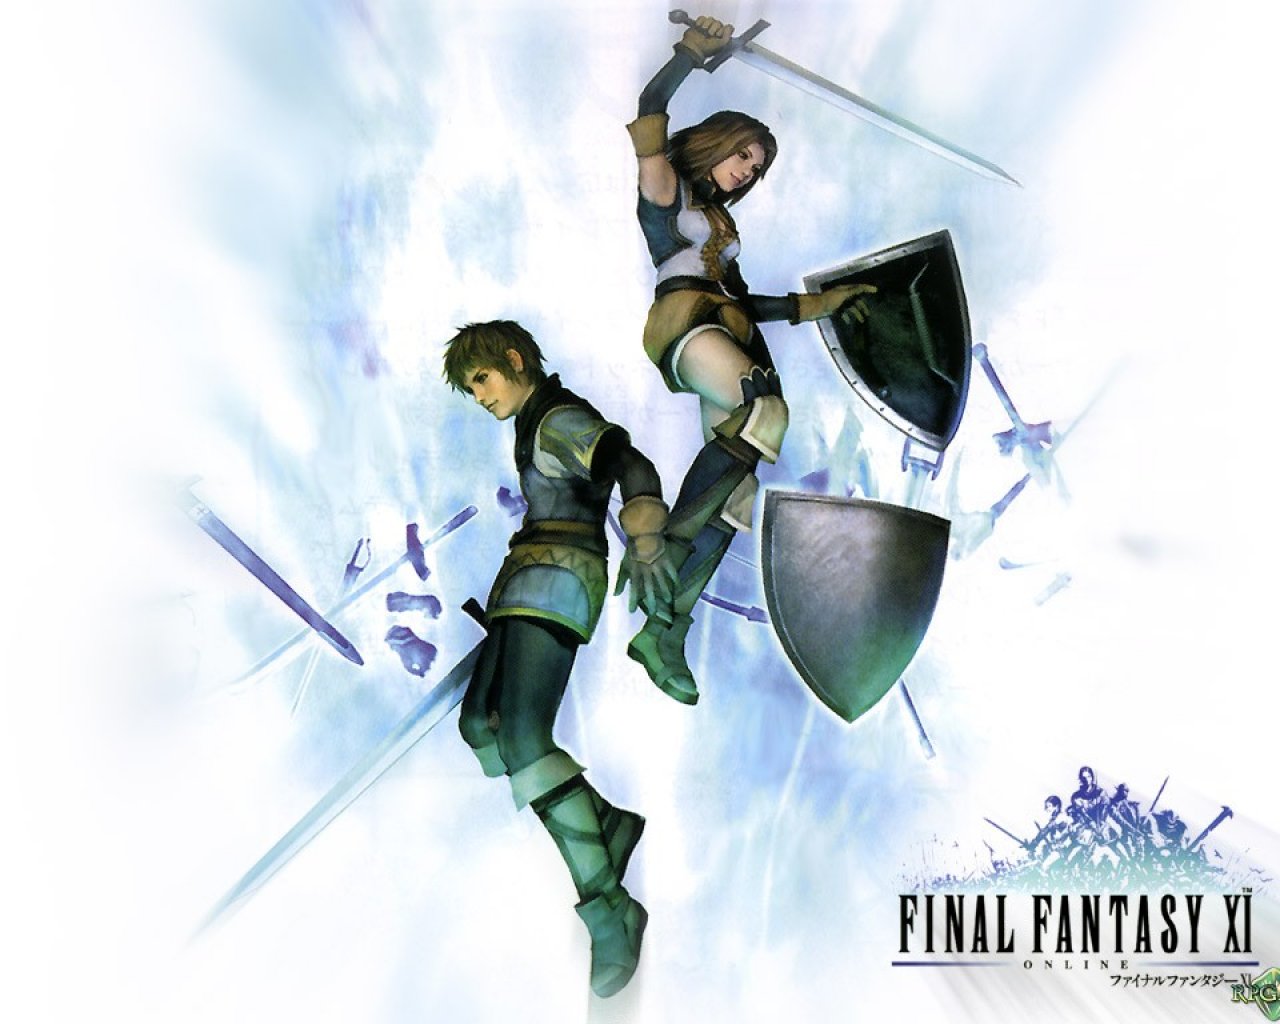  Final Fantasy  11 Wallpapers  Download Final Fantasy  11 